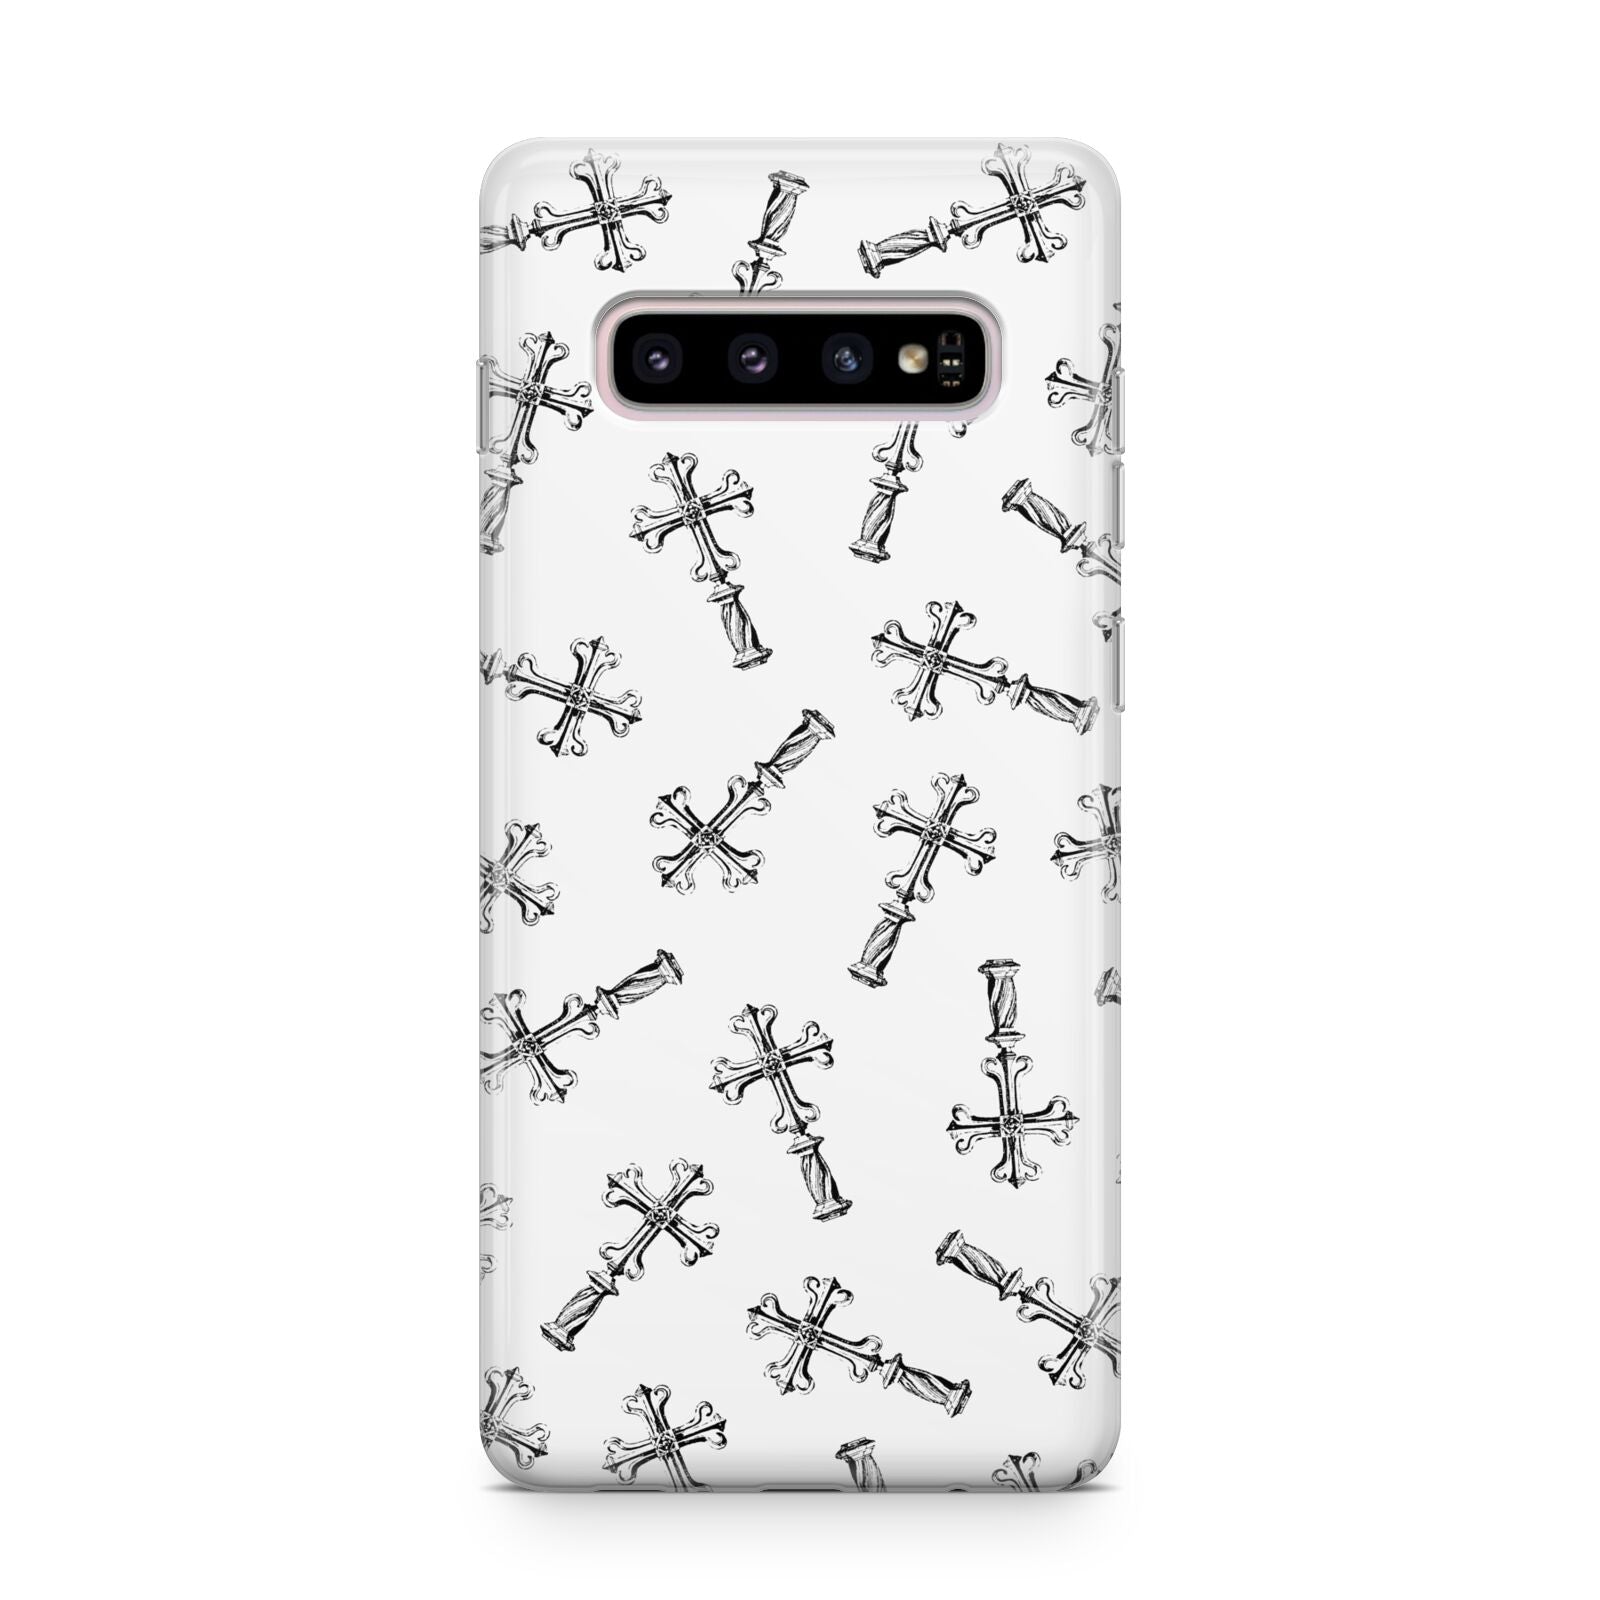 Monochrome Crosses Samsung Galaxy S10 Plus Case